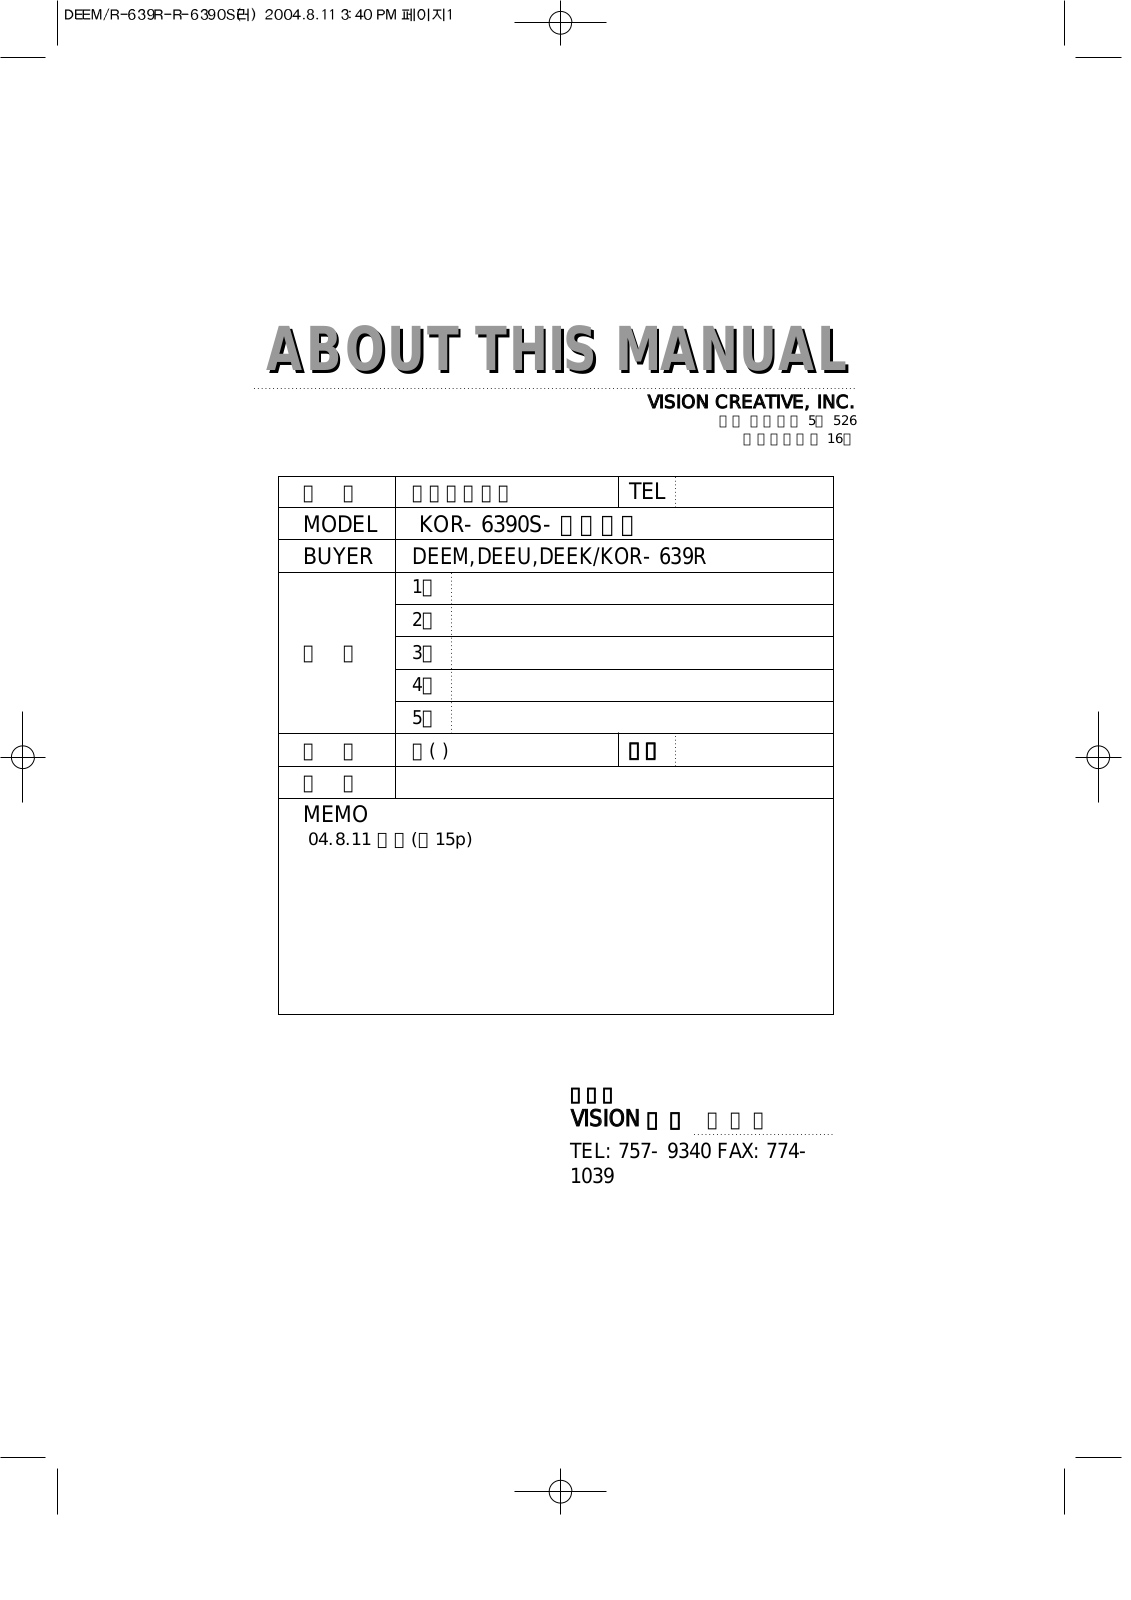 Daewoo KOR-639R User Manual